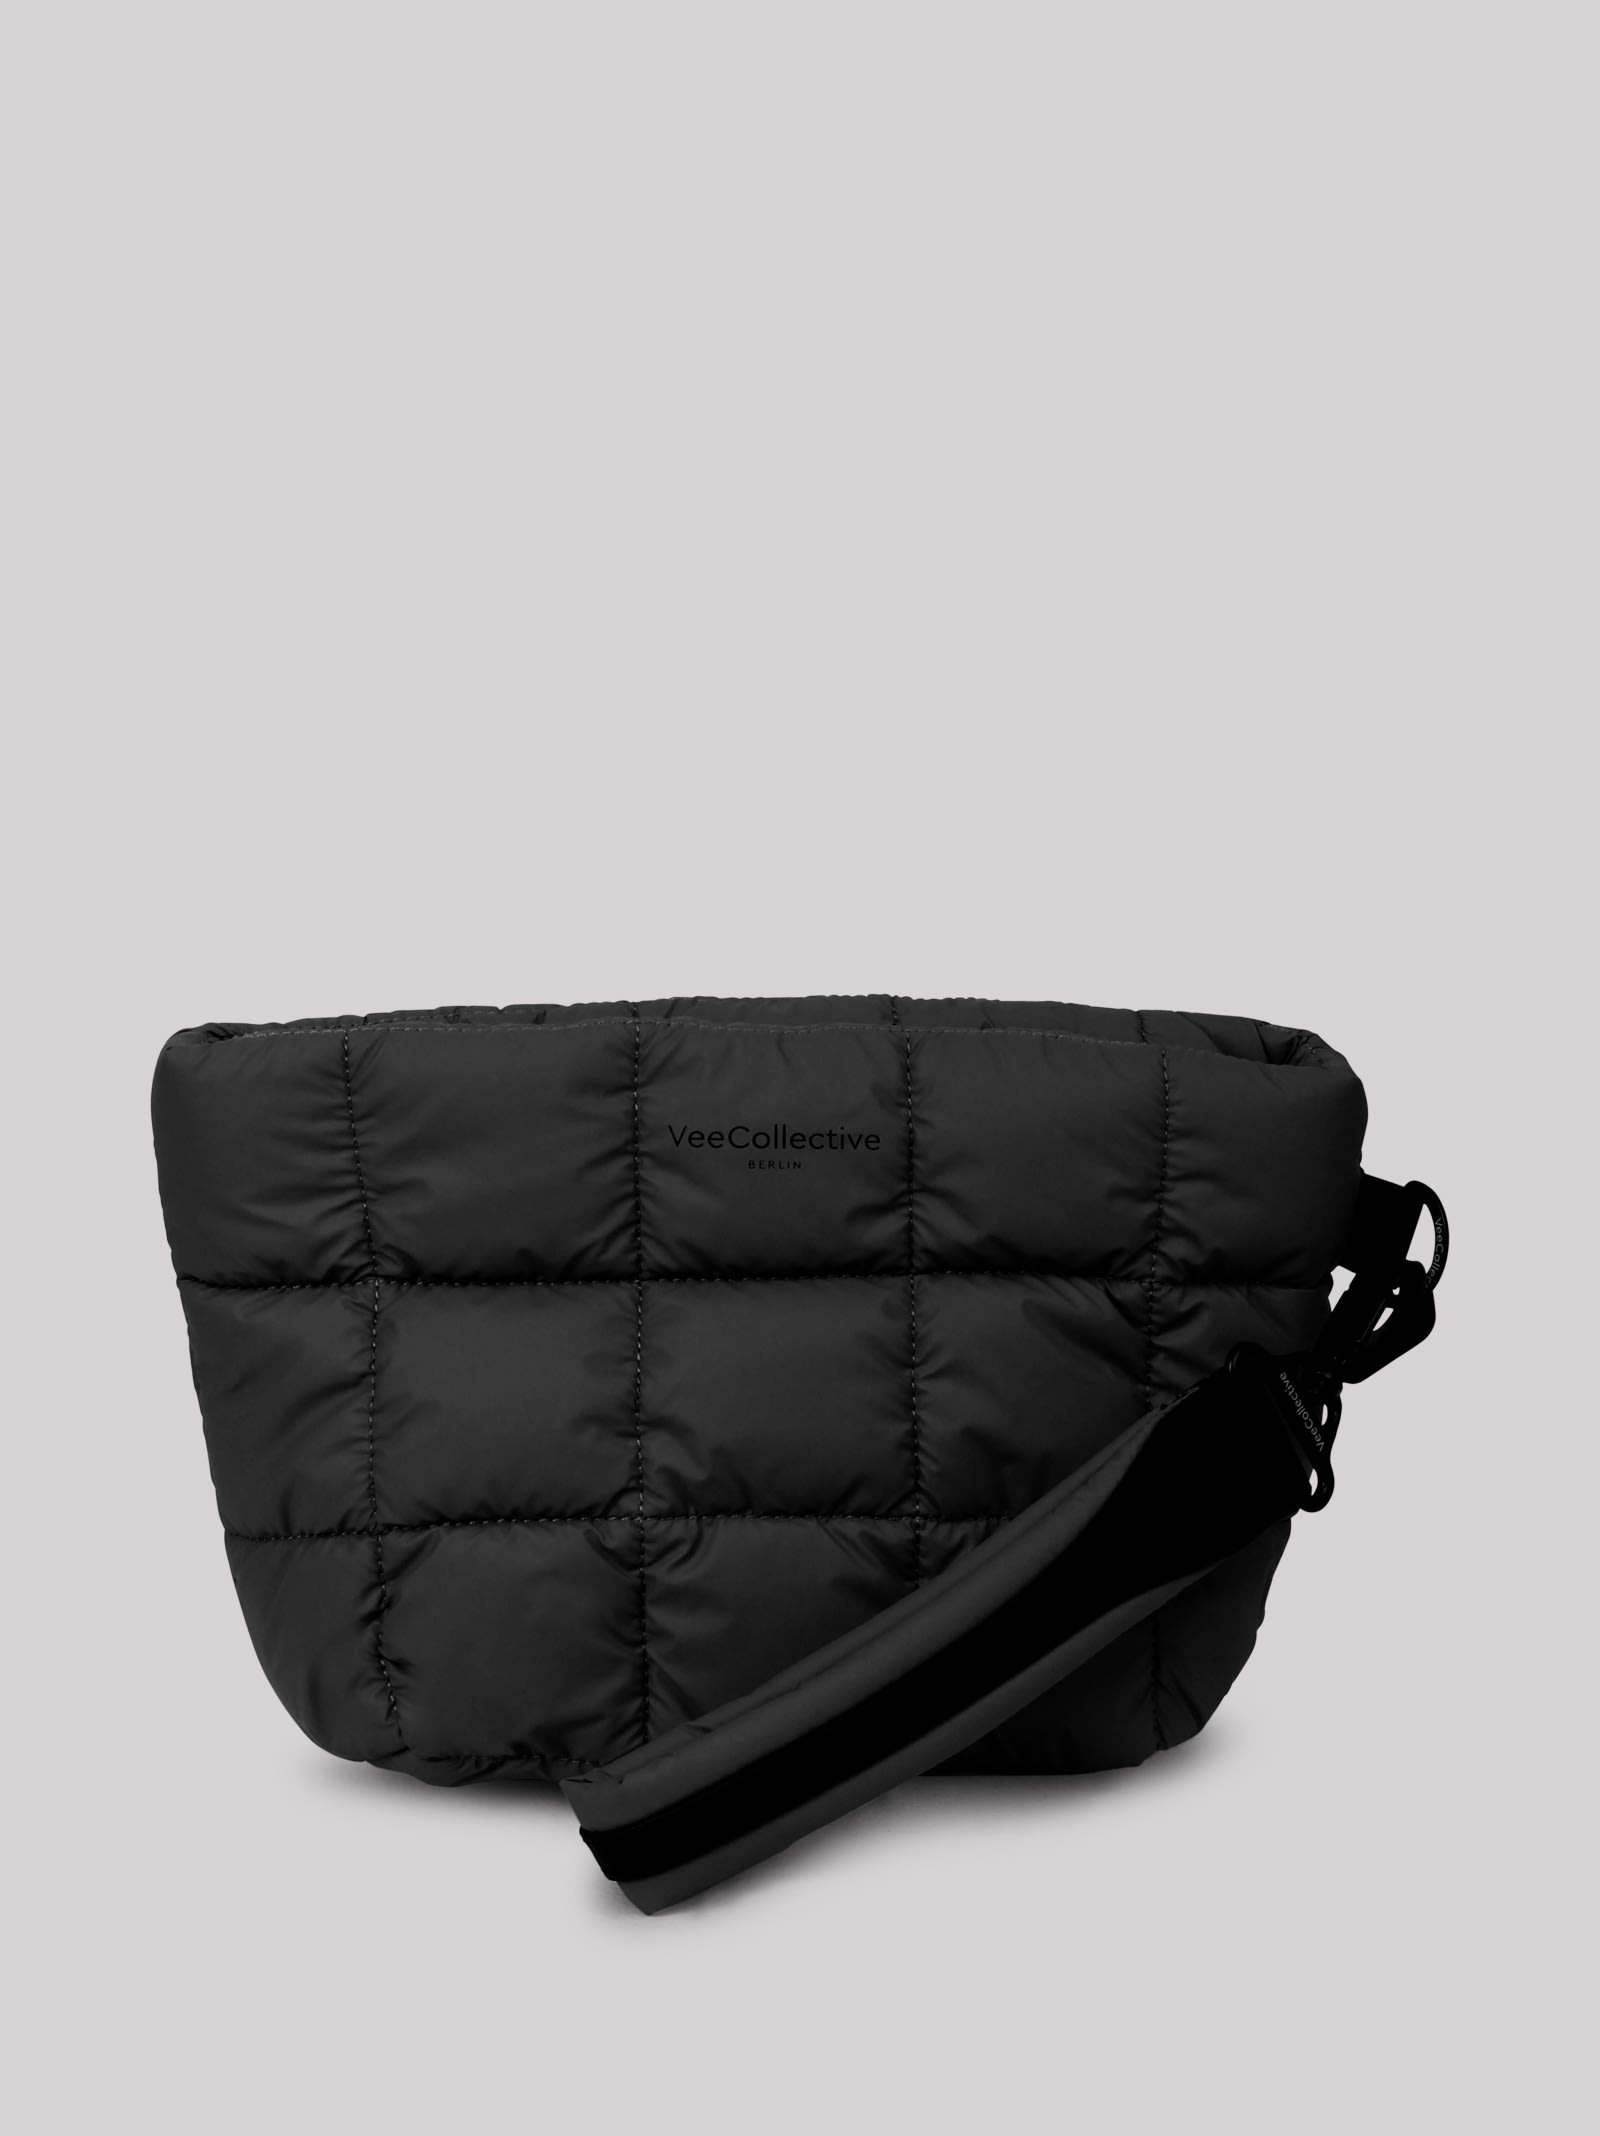 Shop Veecollective Vee Collective Mini Porter Quilted Shoulder Bag